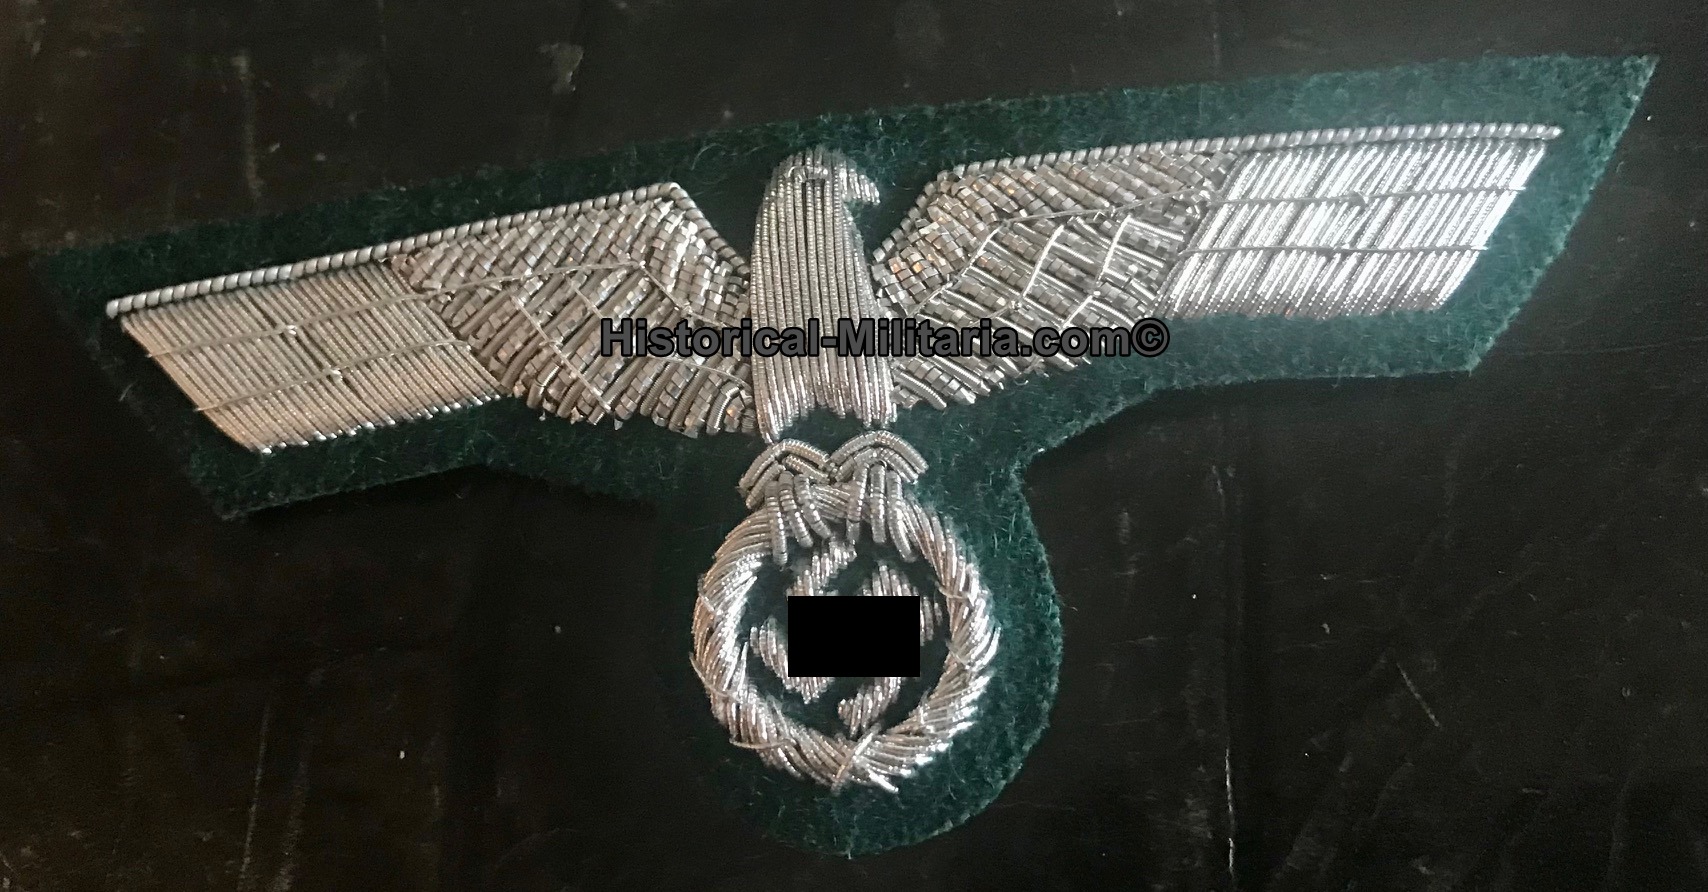 German Wehrmacht Brustadler Offizier auf grün - German Army Officer breast eagle with highlights in silver wire on dark green - Aquila da petto Ufficiale su panno verde